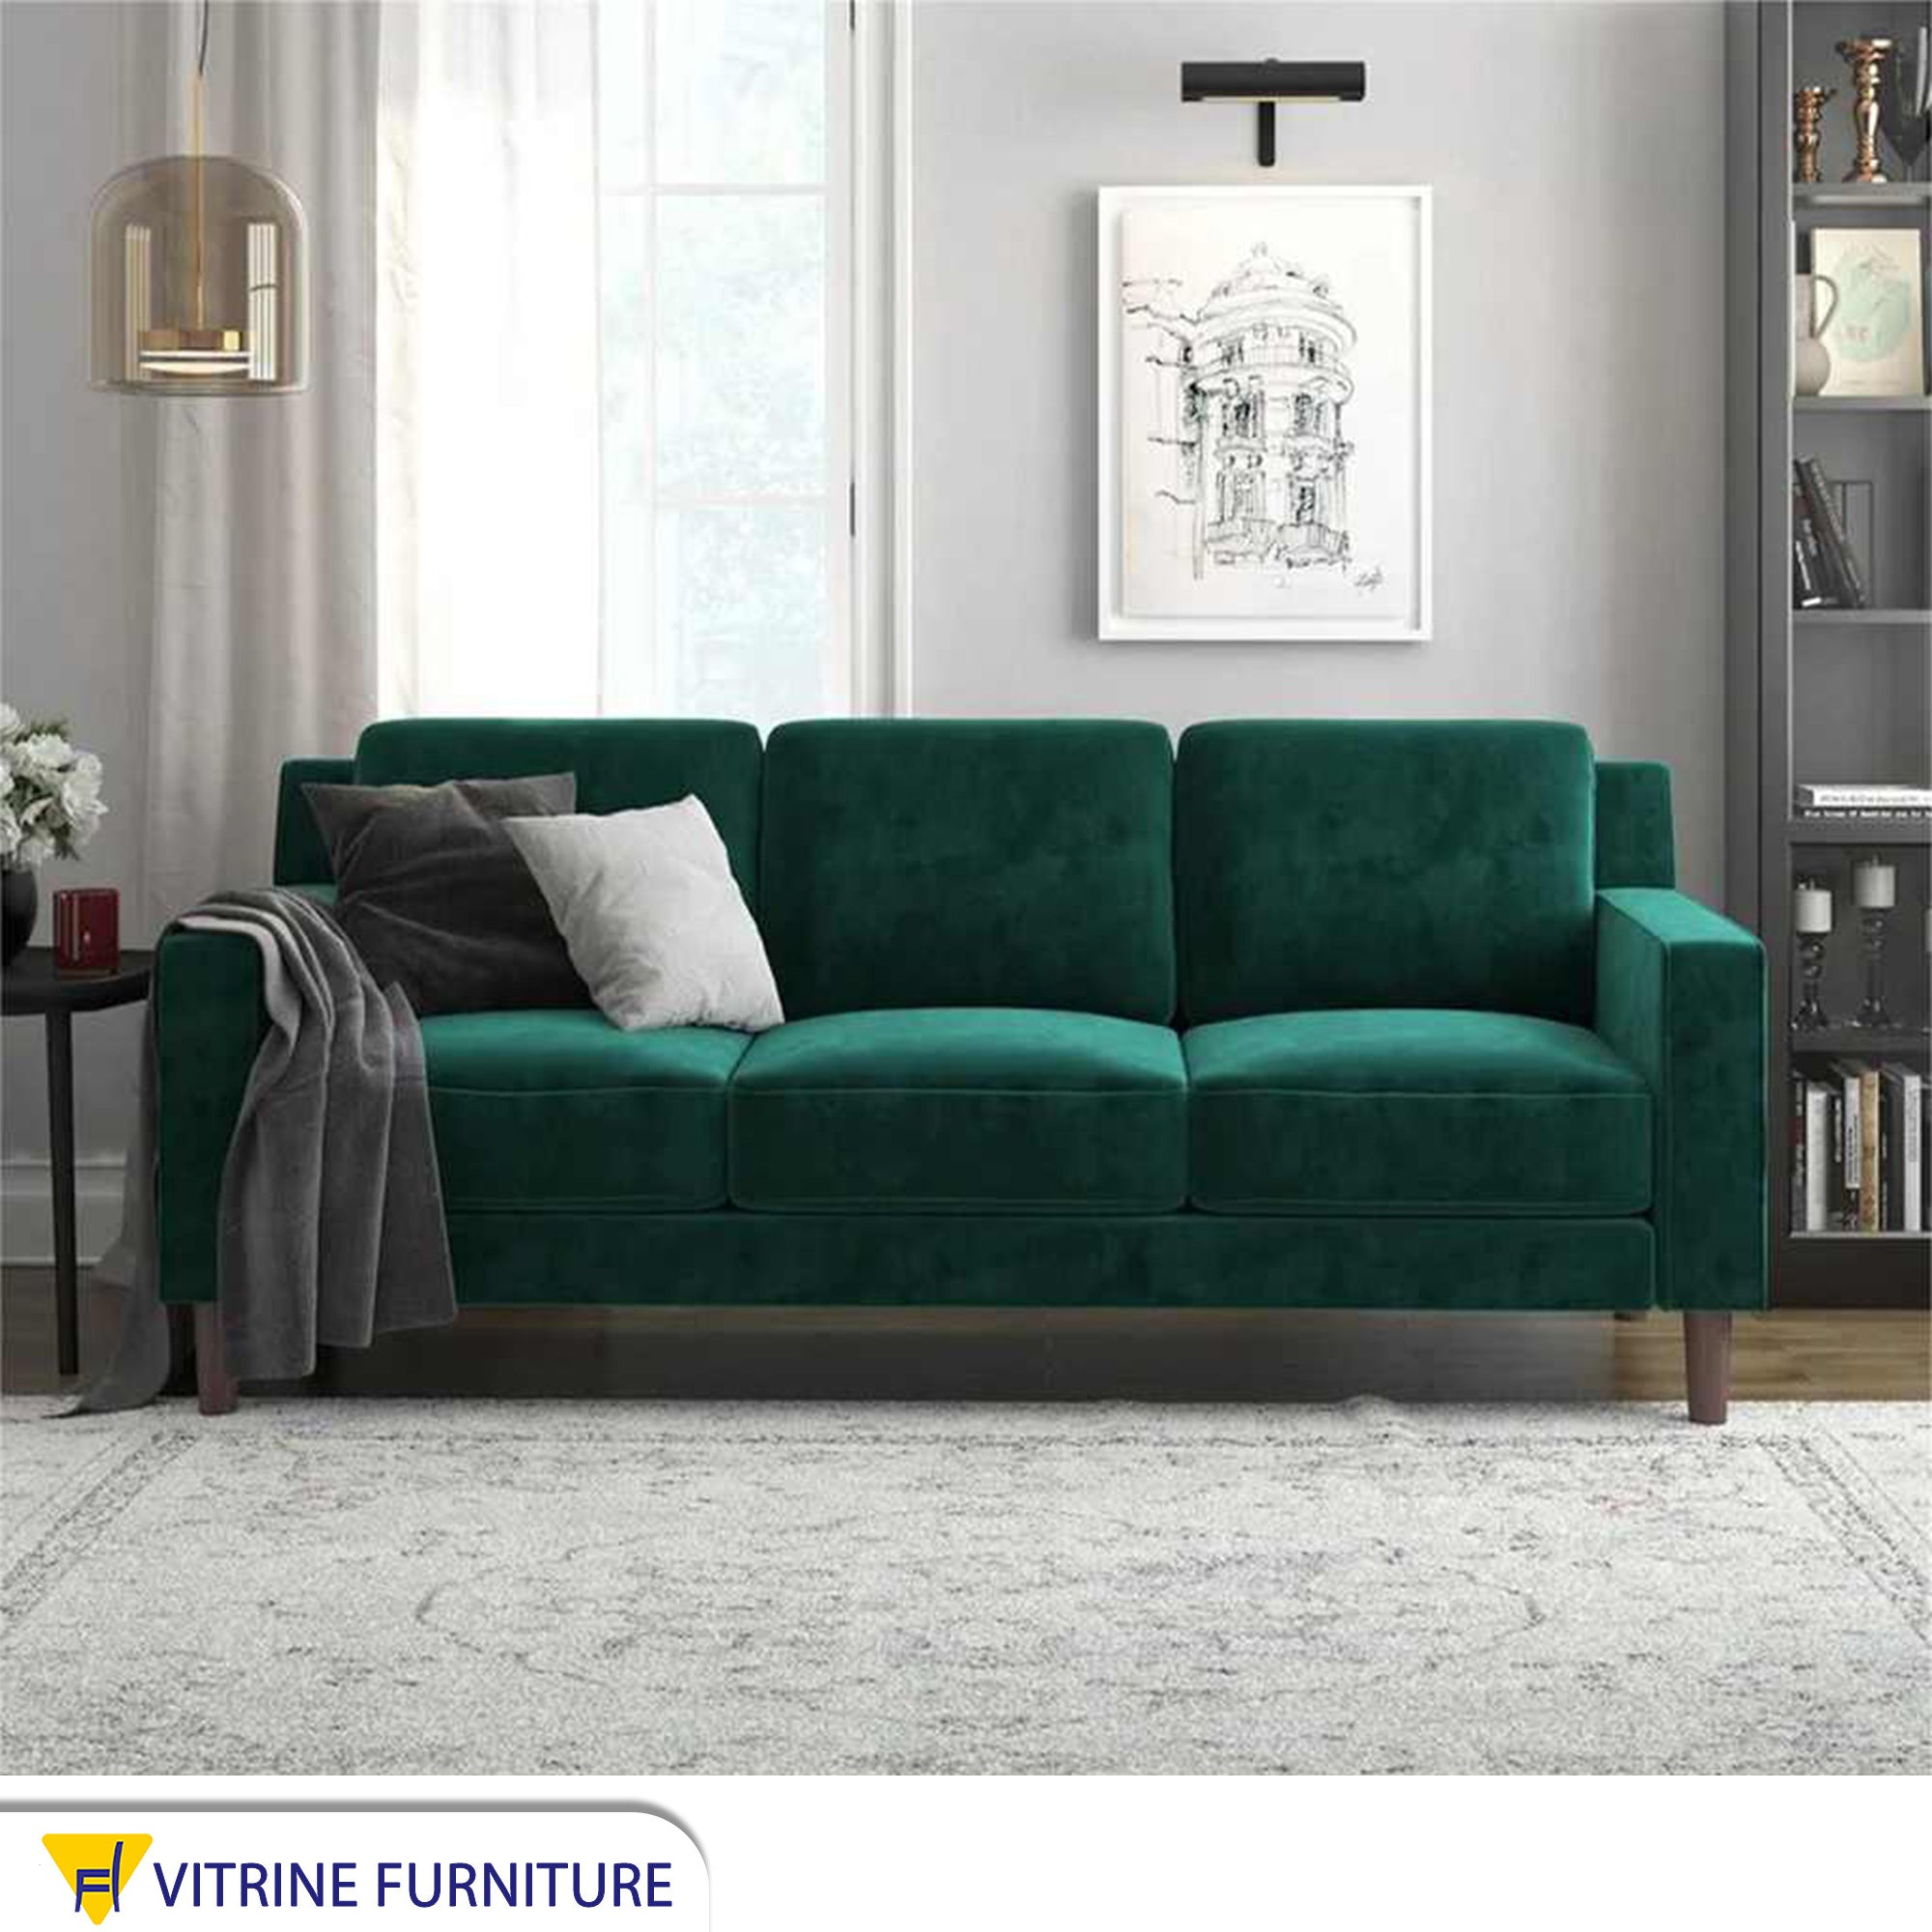 Green triple sofa